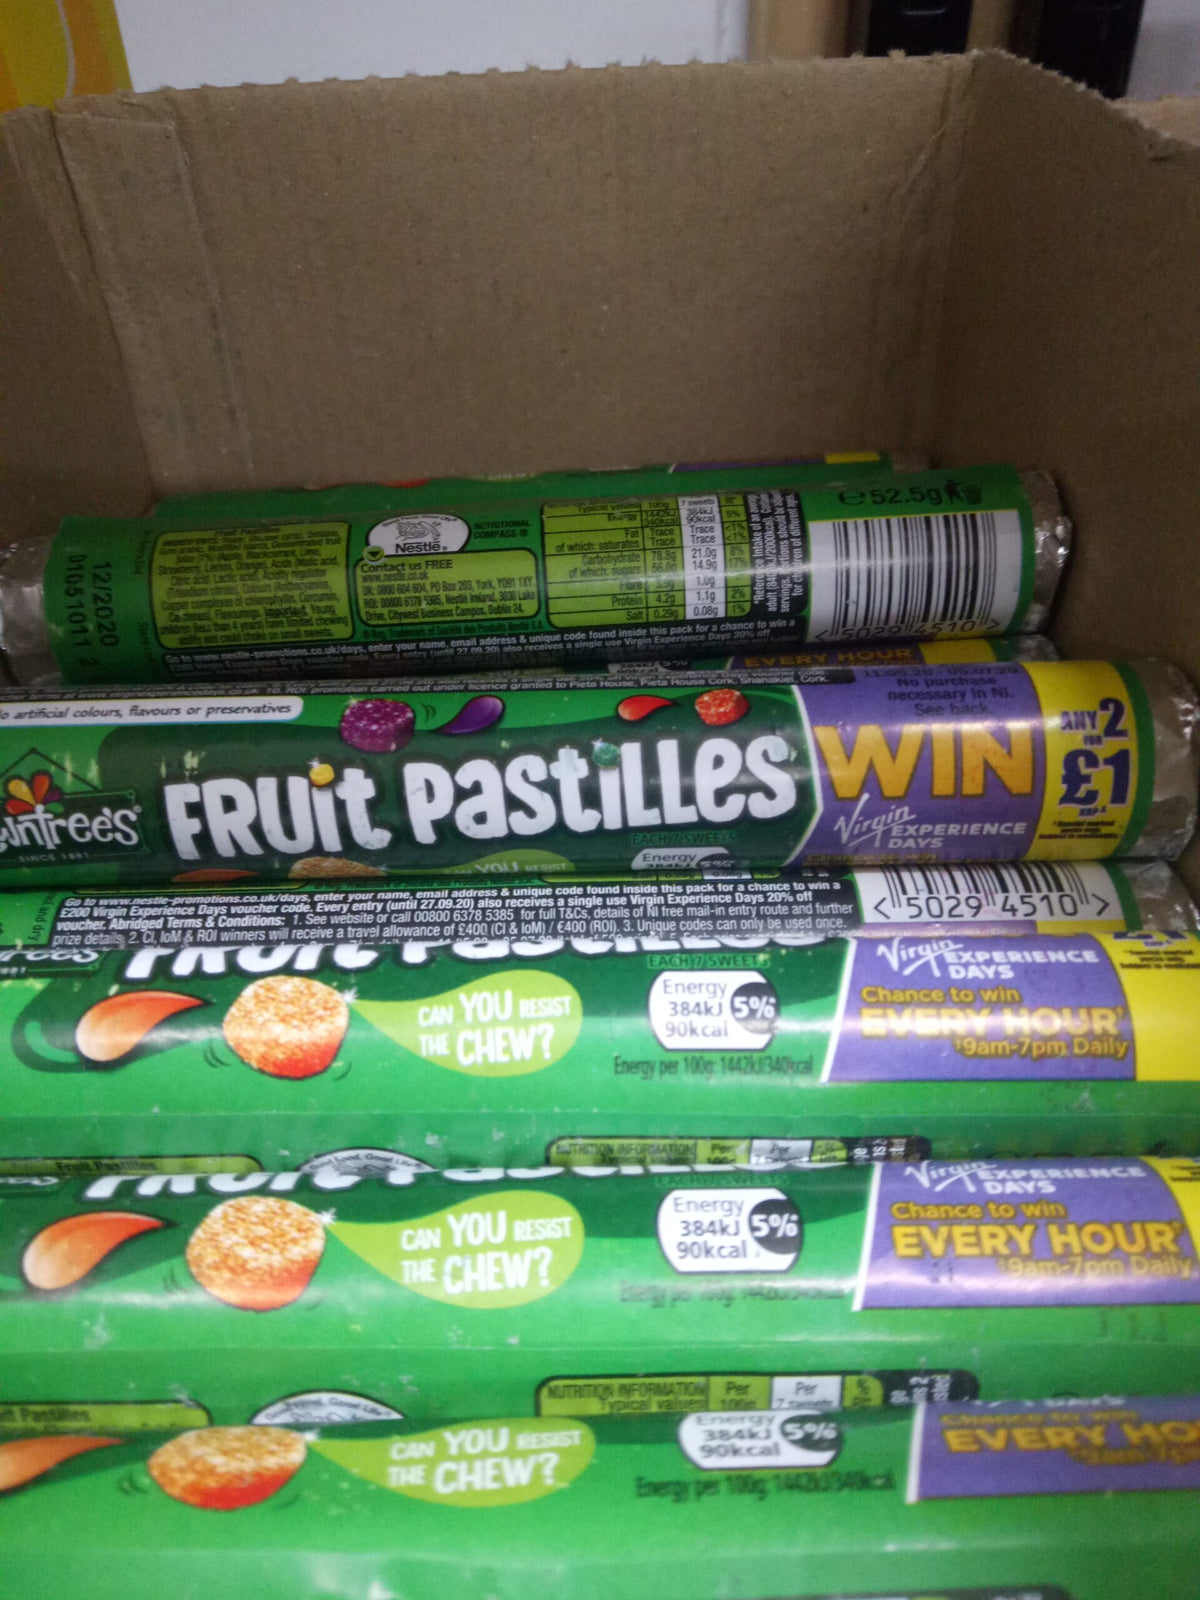 Rowntree's fruit pastilles tube